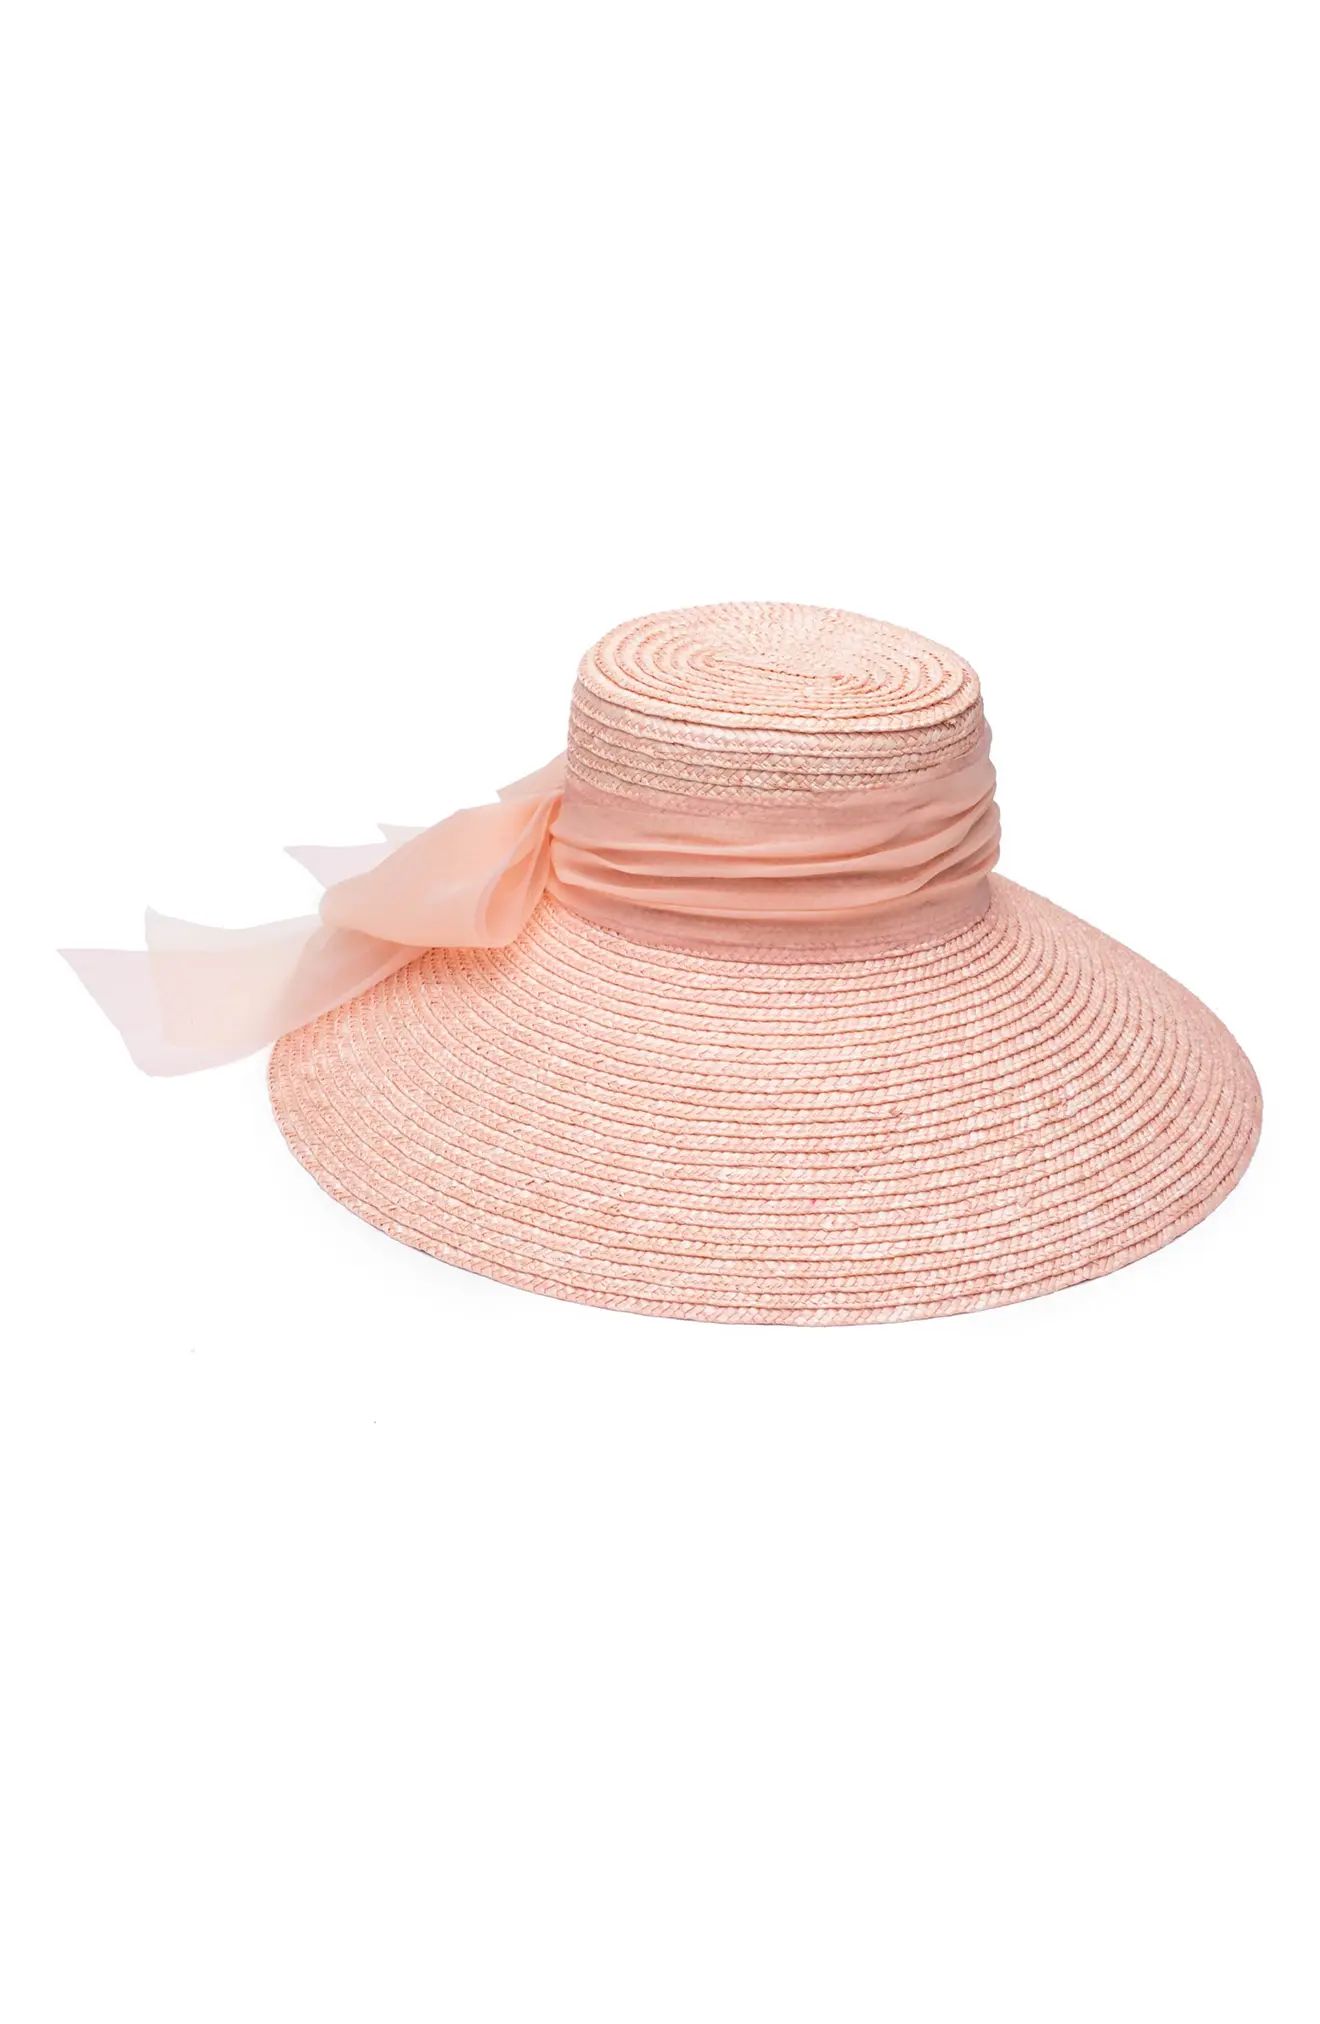 Eugenia Kim Mirabel Straw Hat in Pink at Nordstrom | Nordstrom